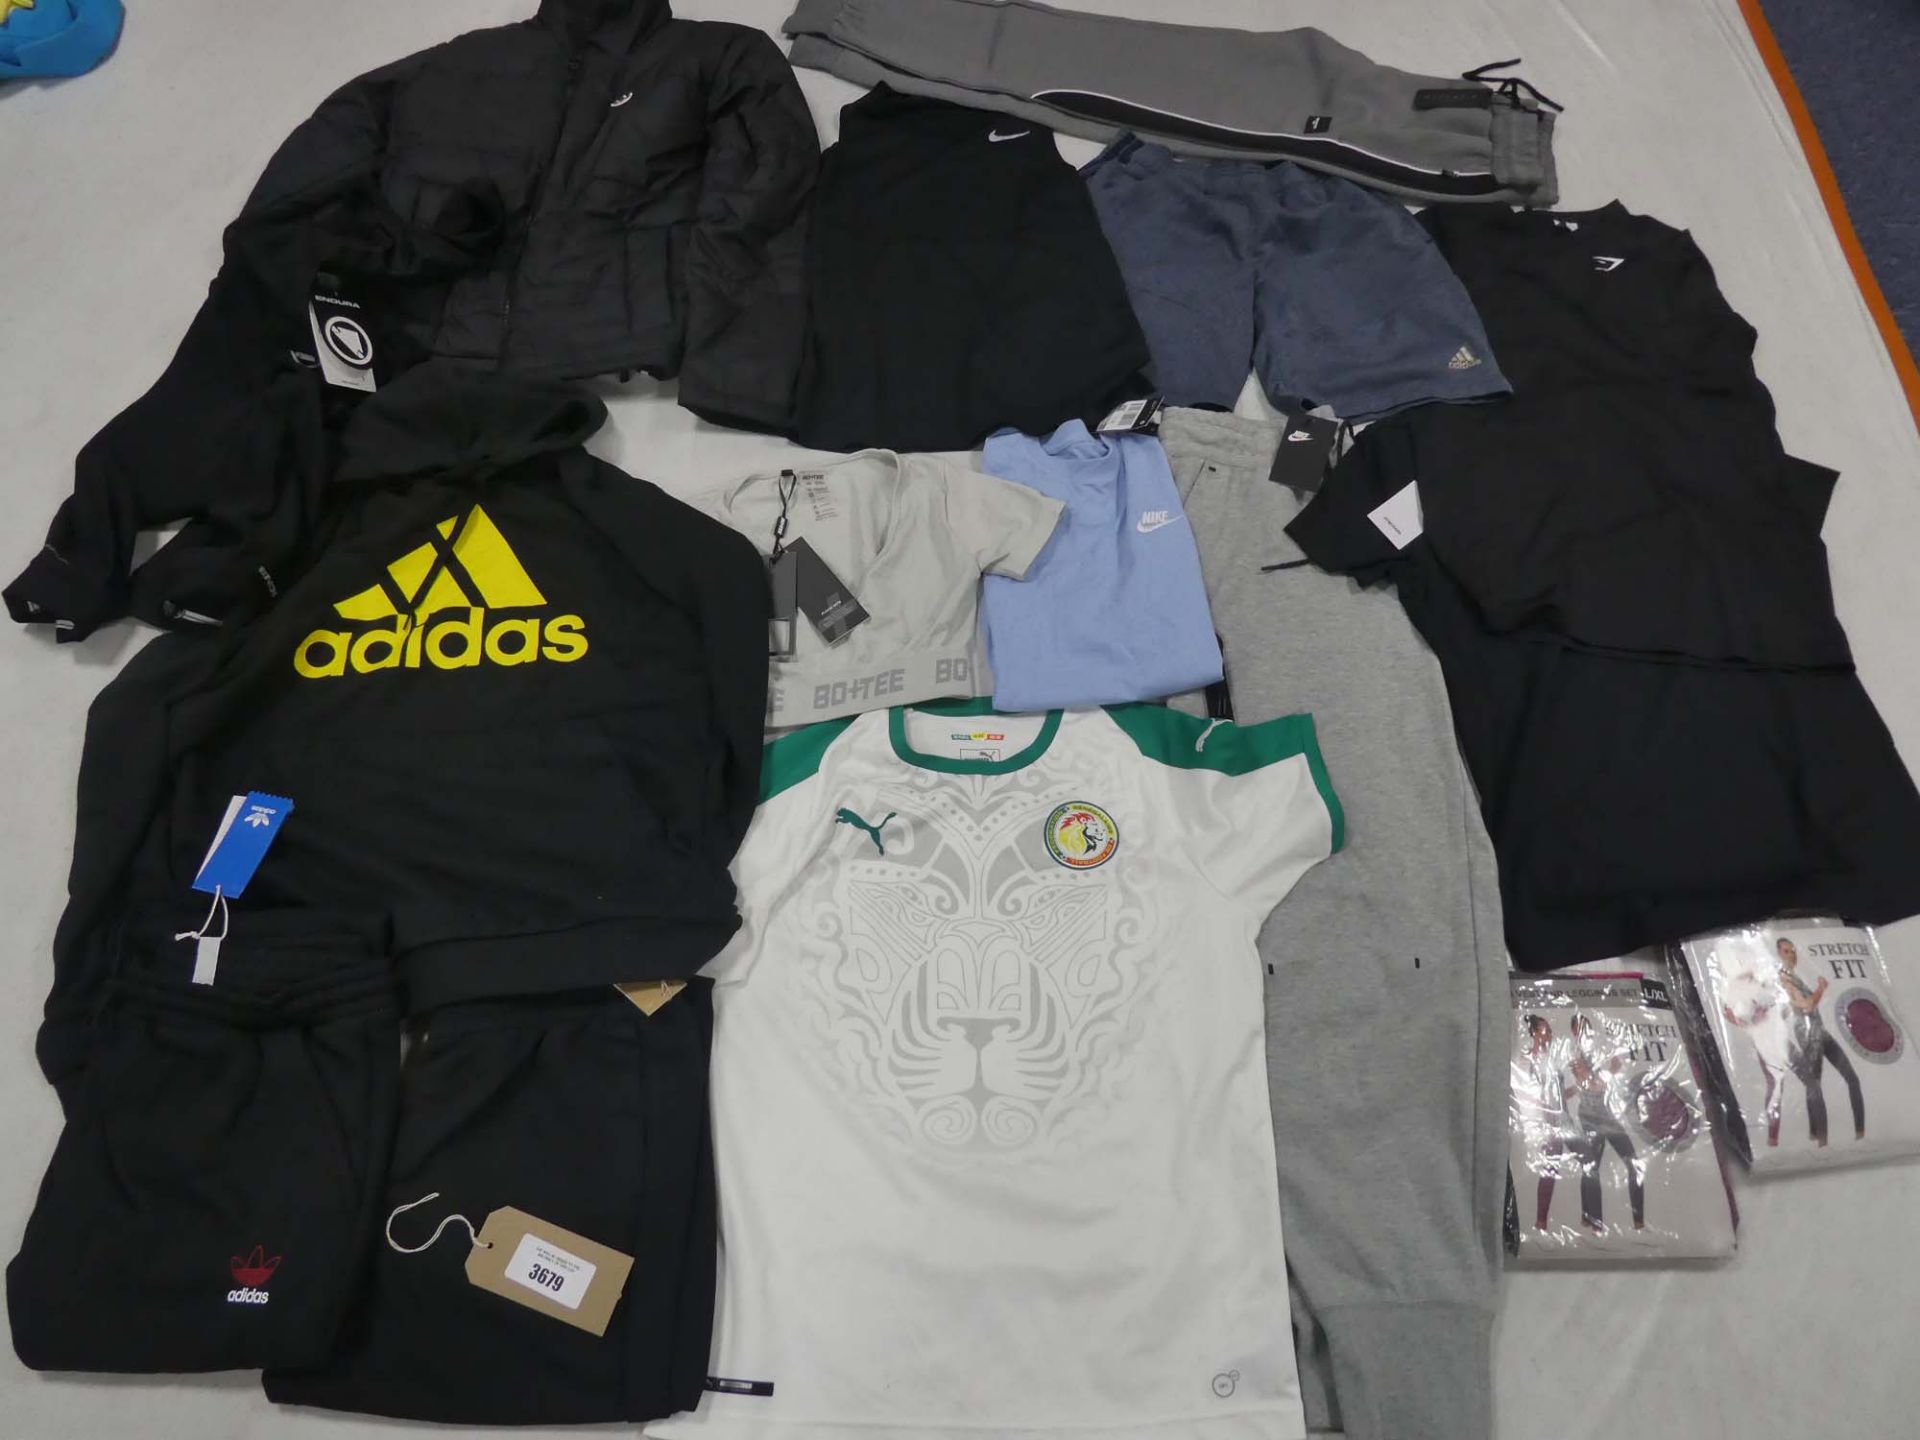 Selection of sportswear to include Adidas, Nike, Bo+Tee, etc